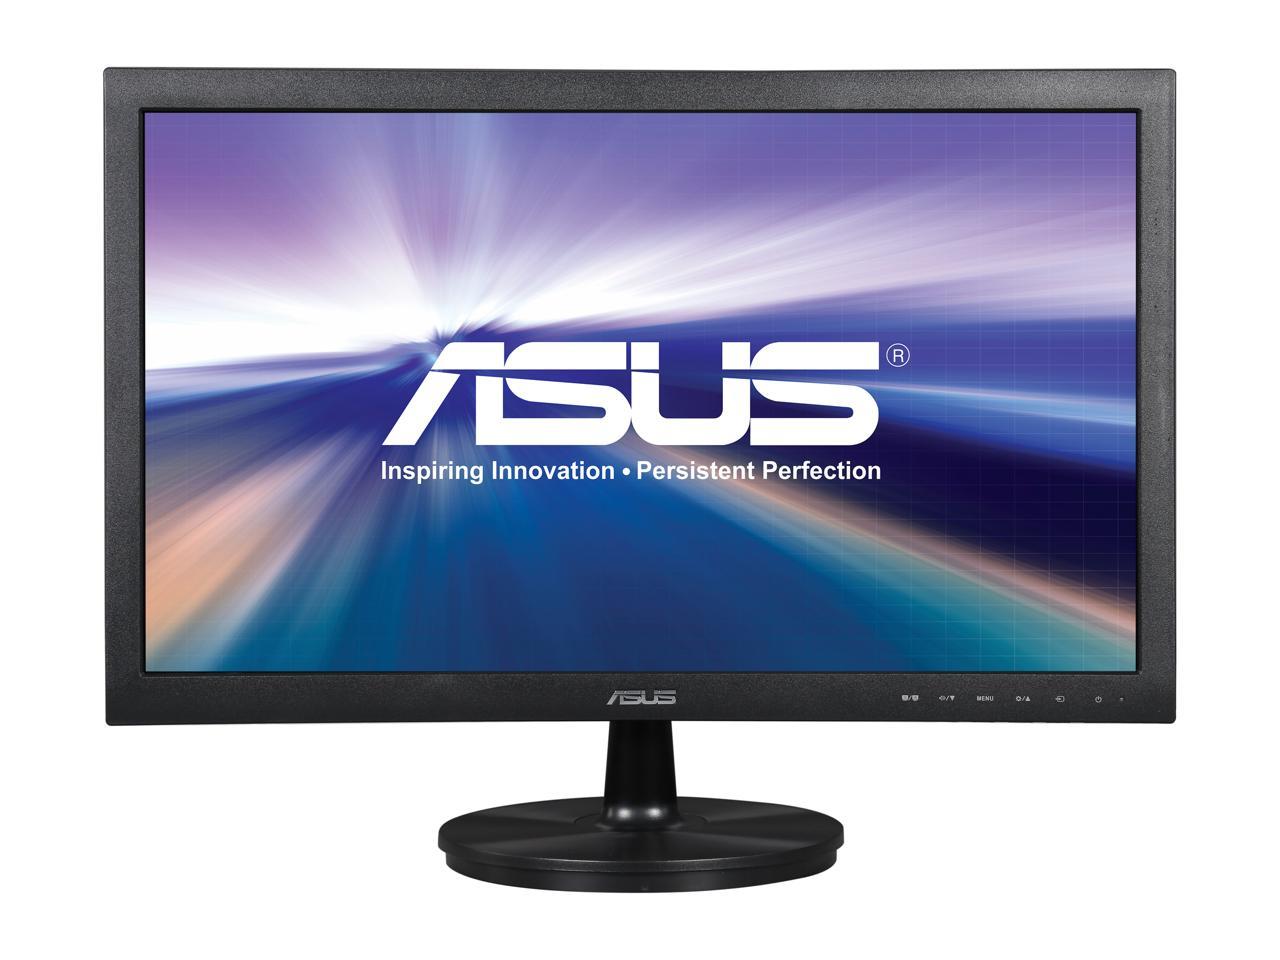 ASUS VS228T-P 22" (Actual size 21.5") Full HD 1920 x 1080 5ms VGA DVI Built-in Speakers LED Backlit LCD Monitor